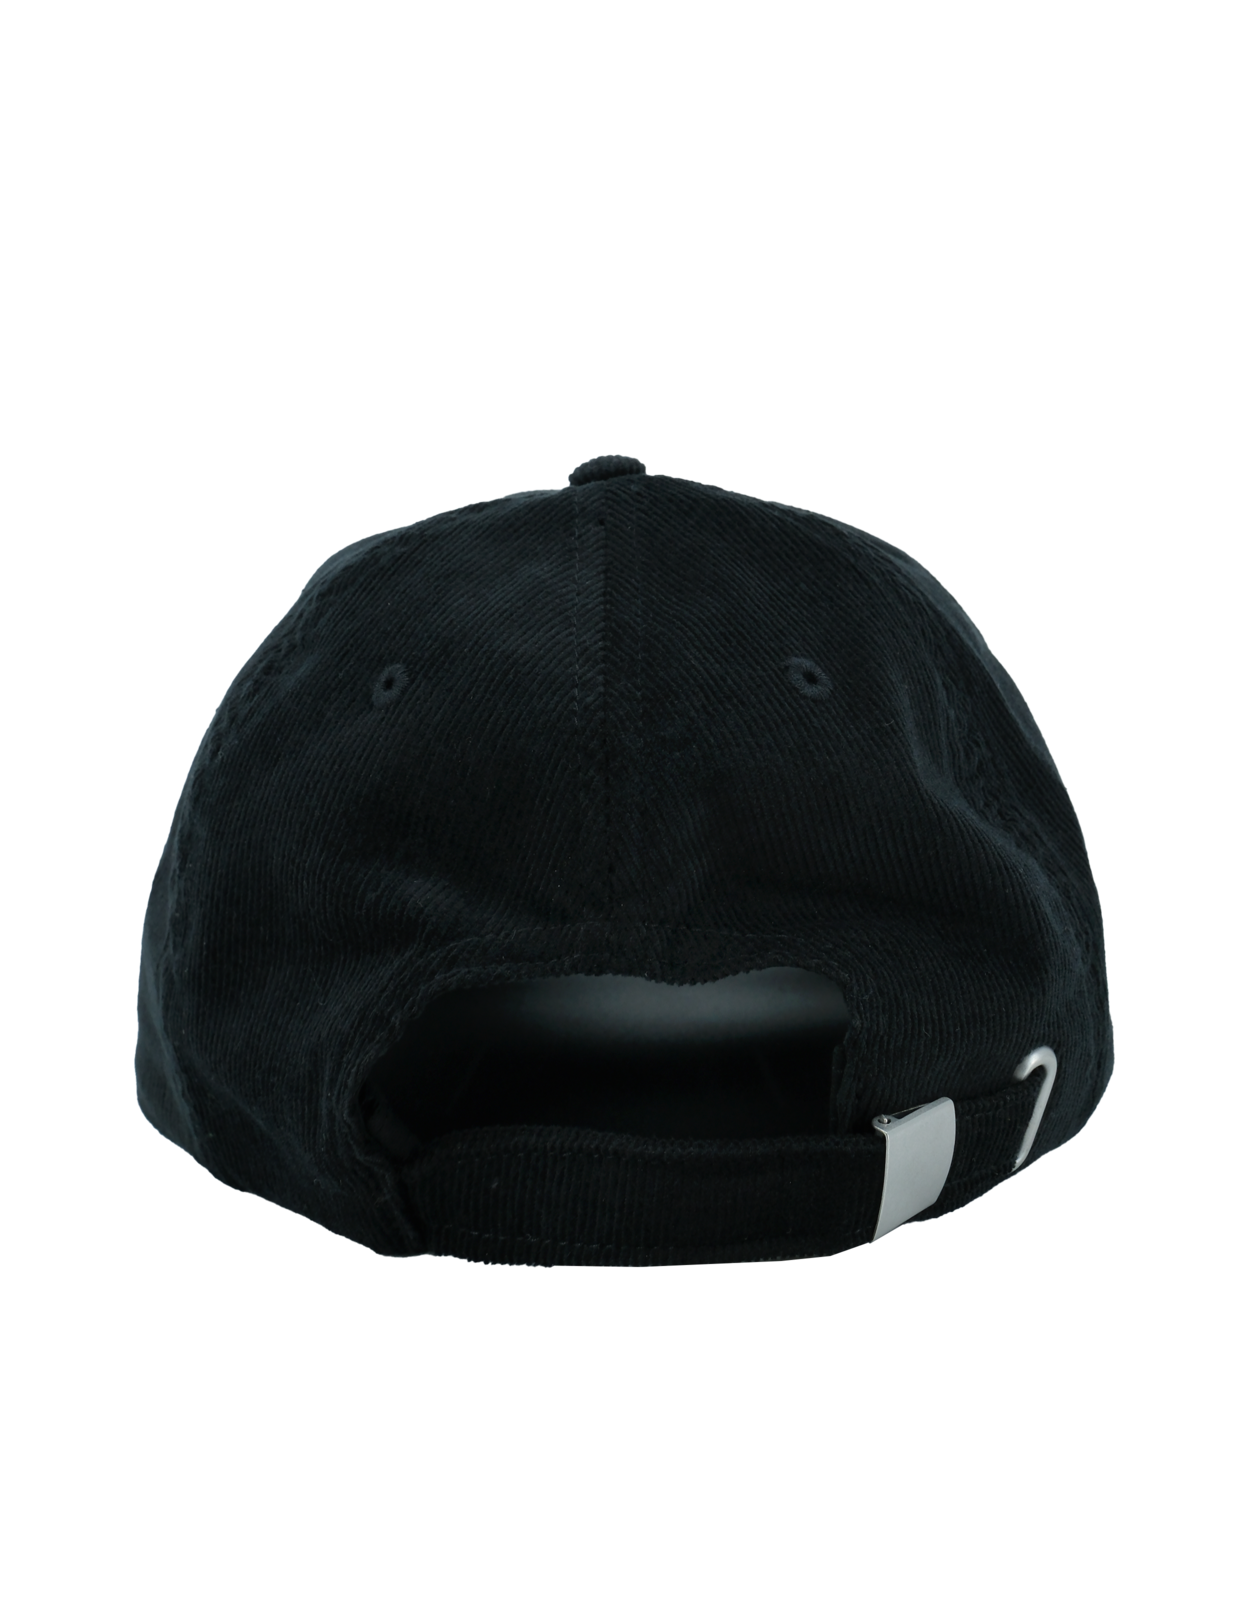 The manchester cap black